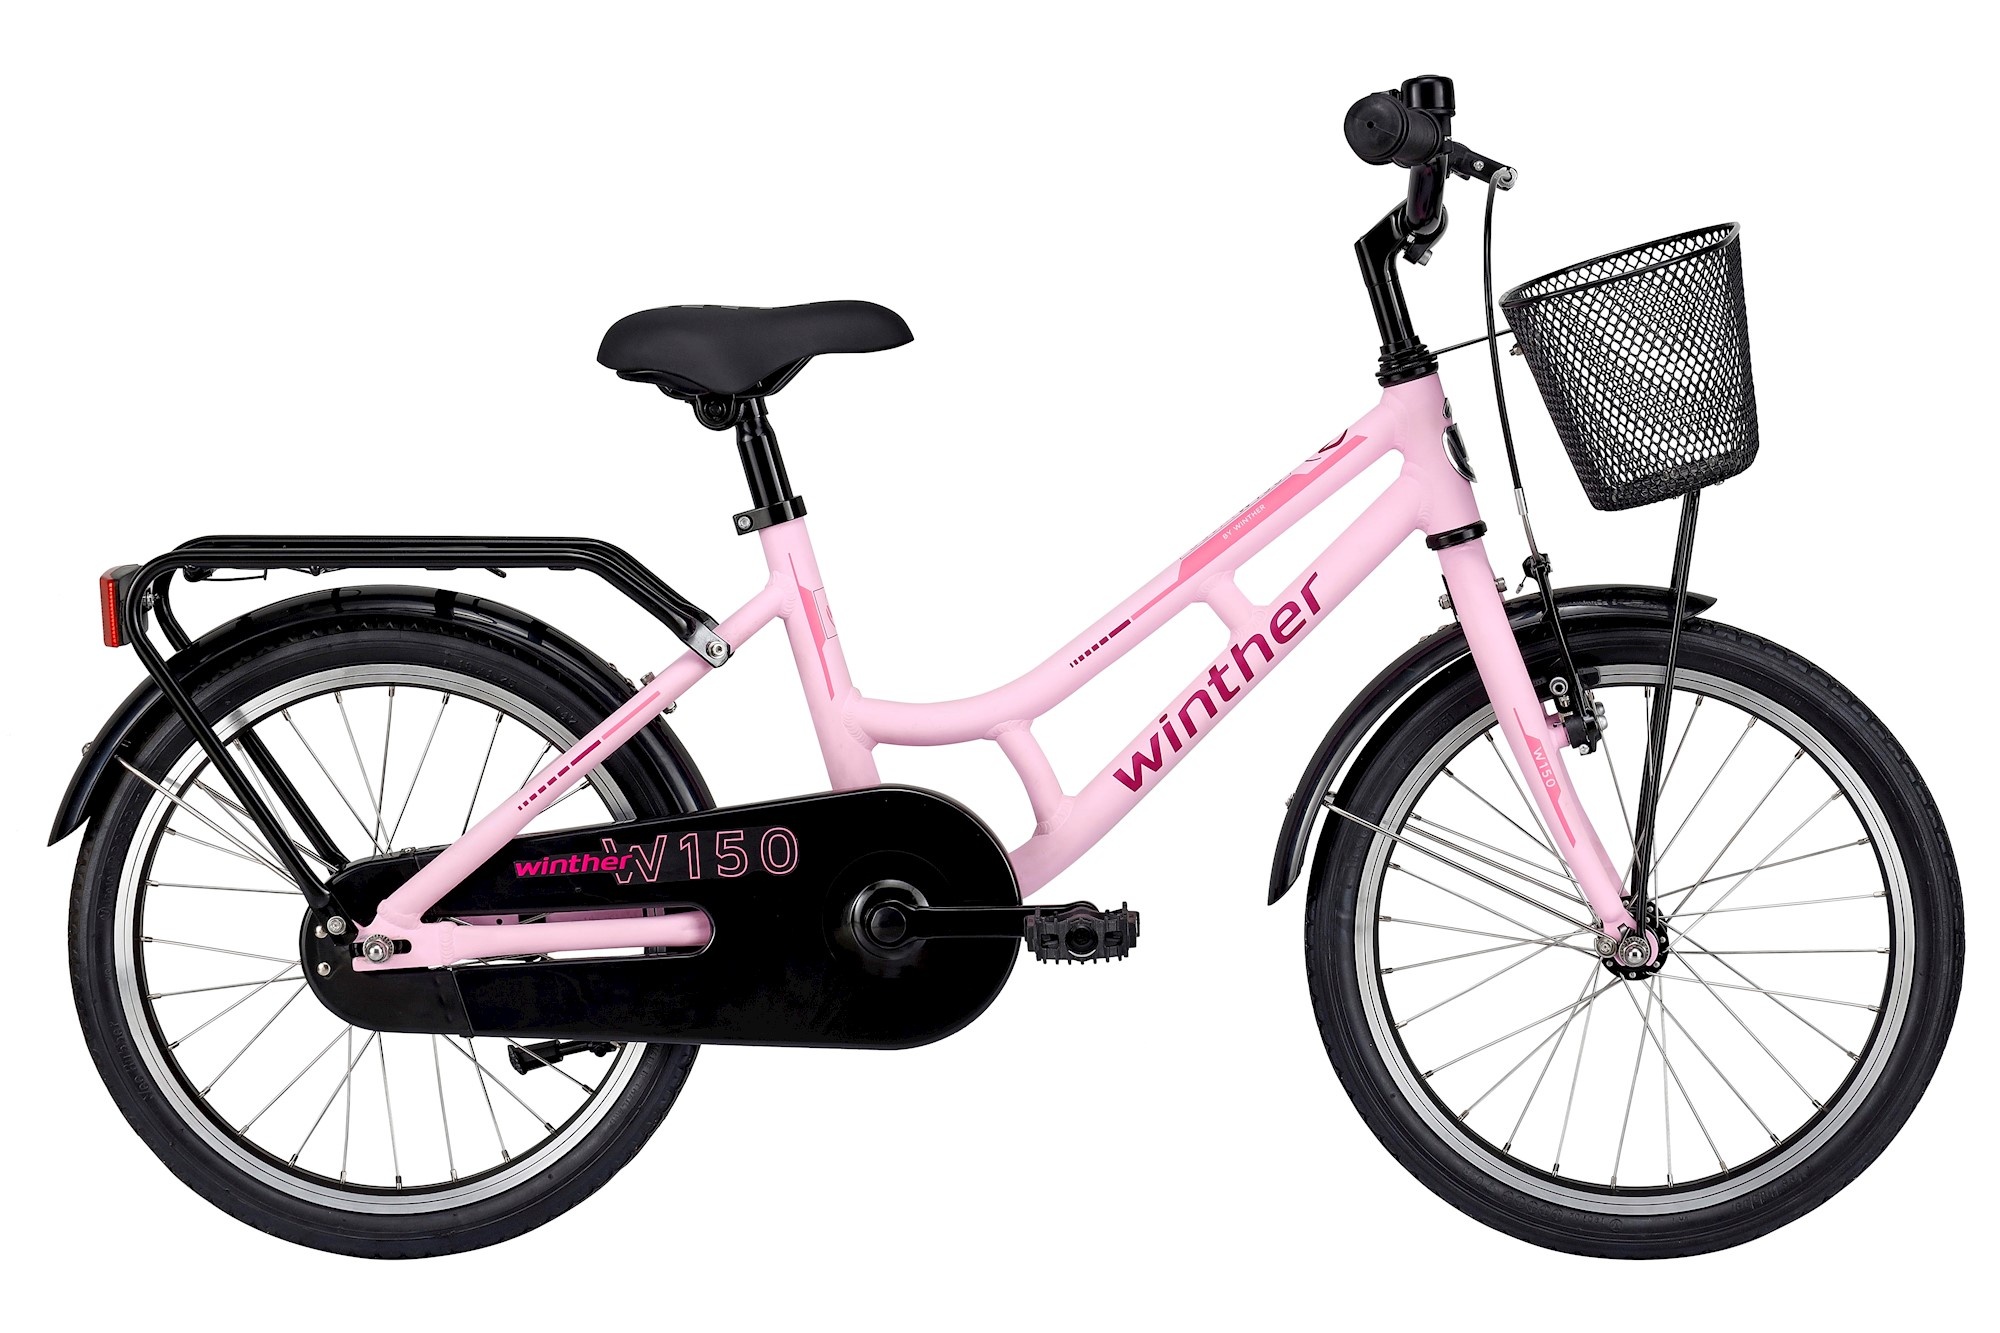 Cykler - Børnecykler - Winther 150 18" Pige 1g 2023 - Lyserød